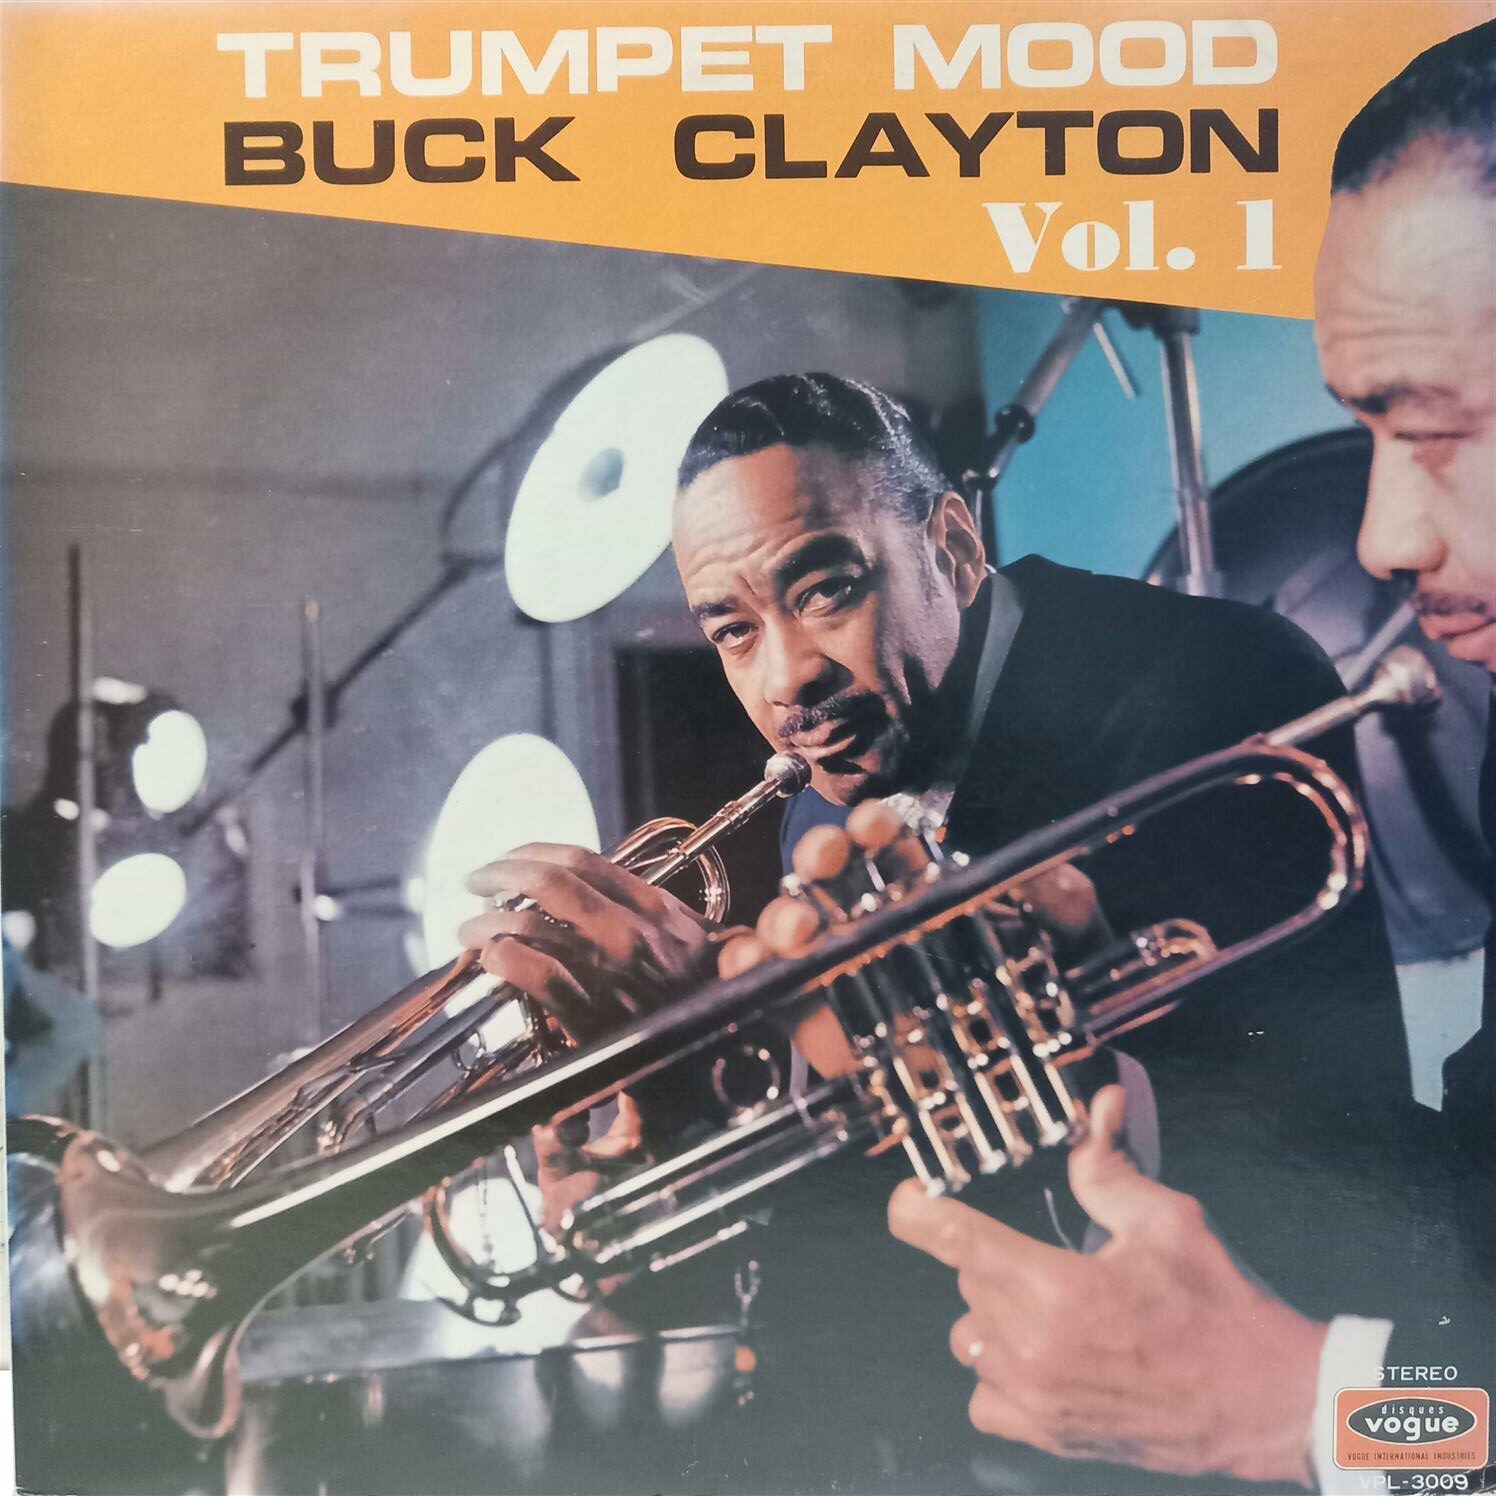 BUCK CLAYTON – TRUMPET MOOD VOL. 1 ON